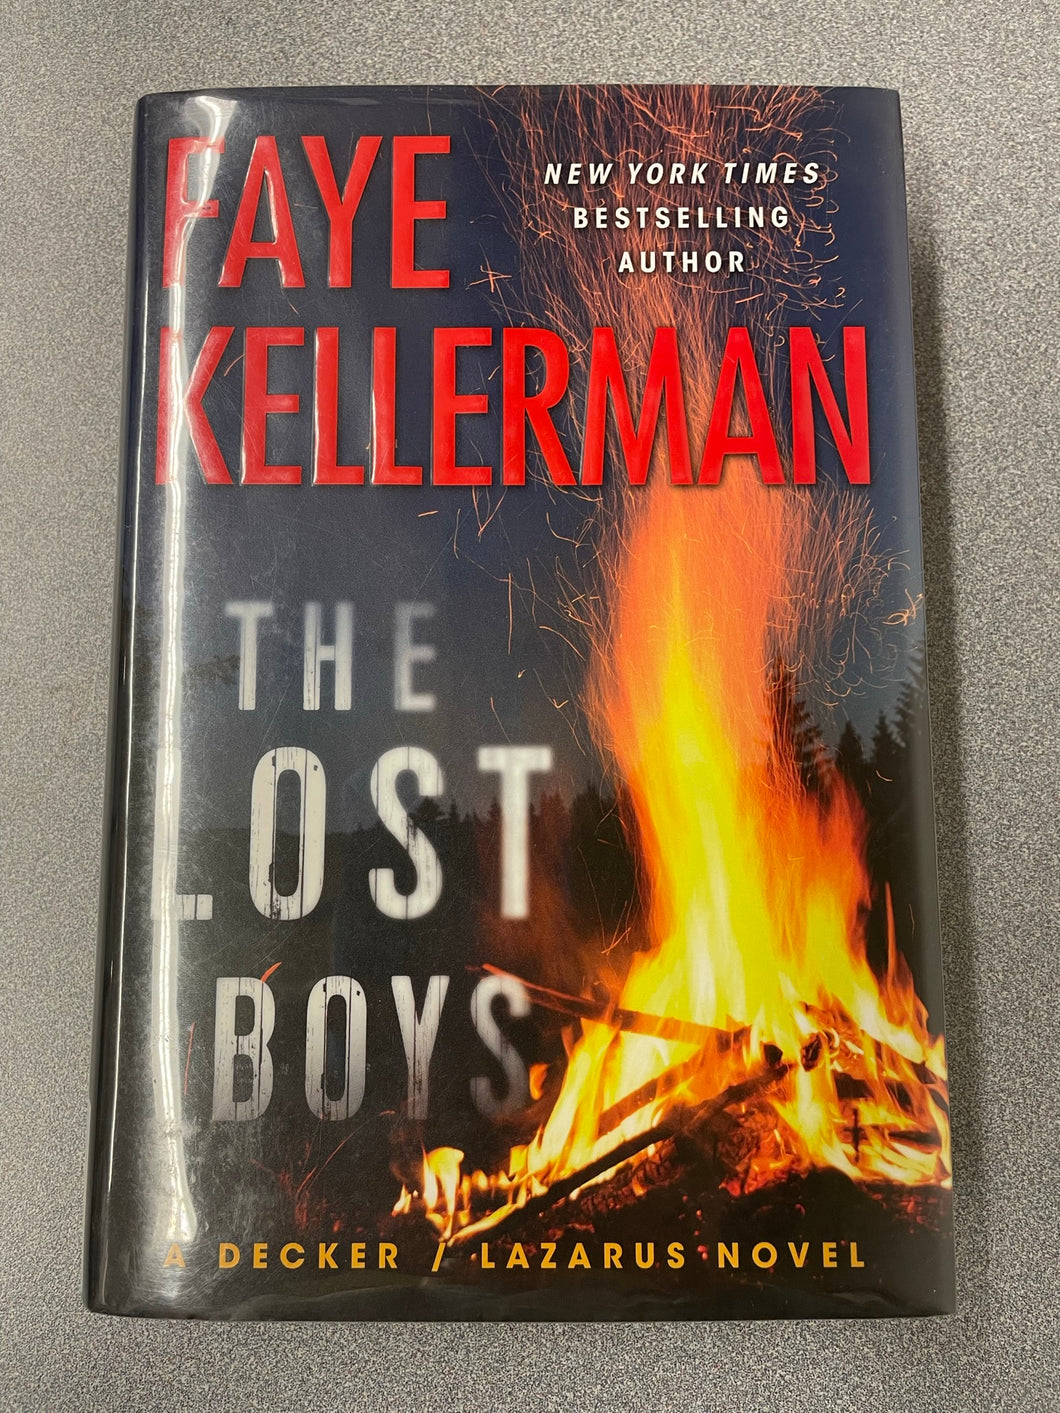 Kellerman, Faye, The Lost Boys: a Decker/Lazarus Novel [2021] RBS 10/22